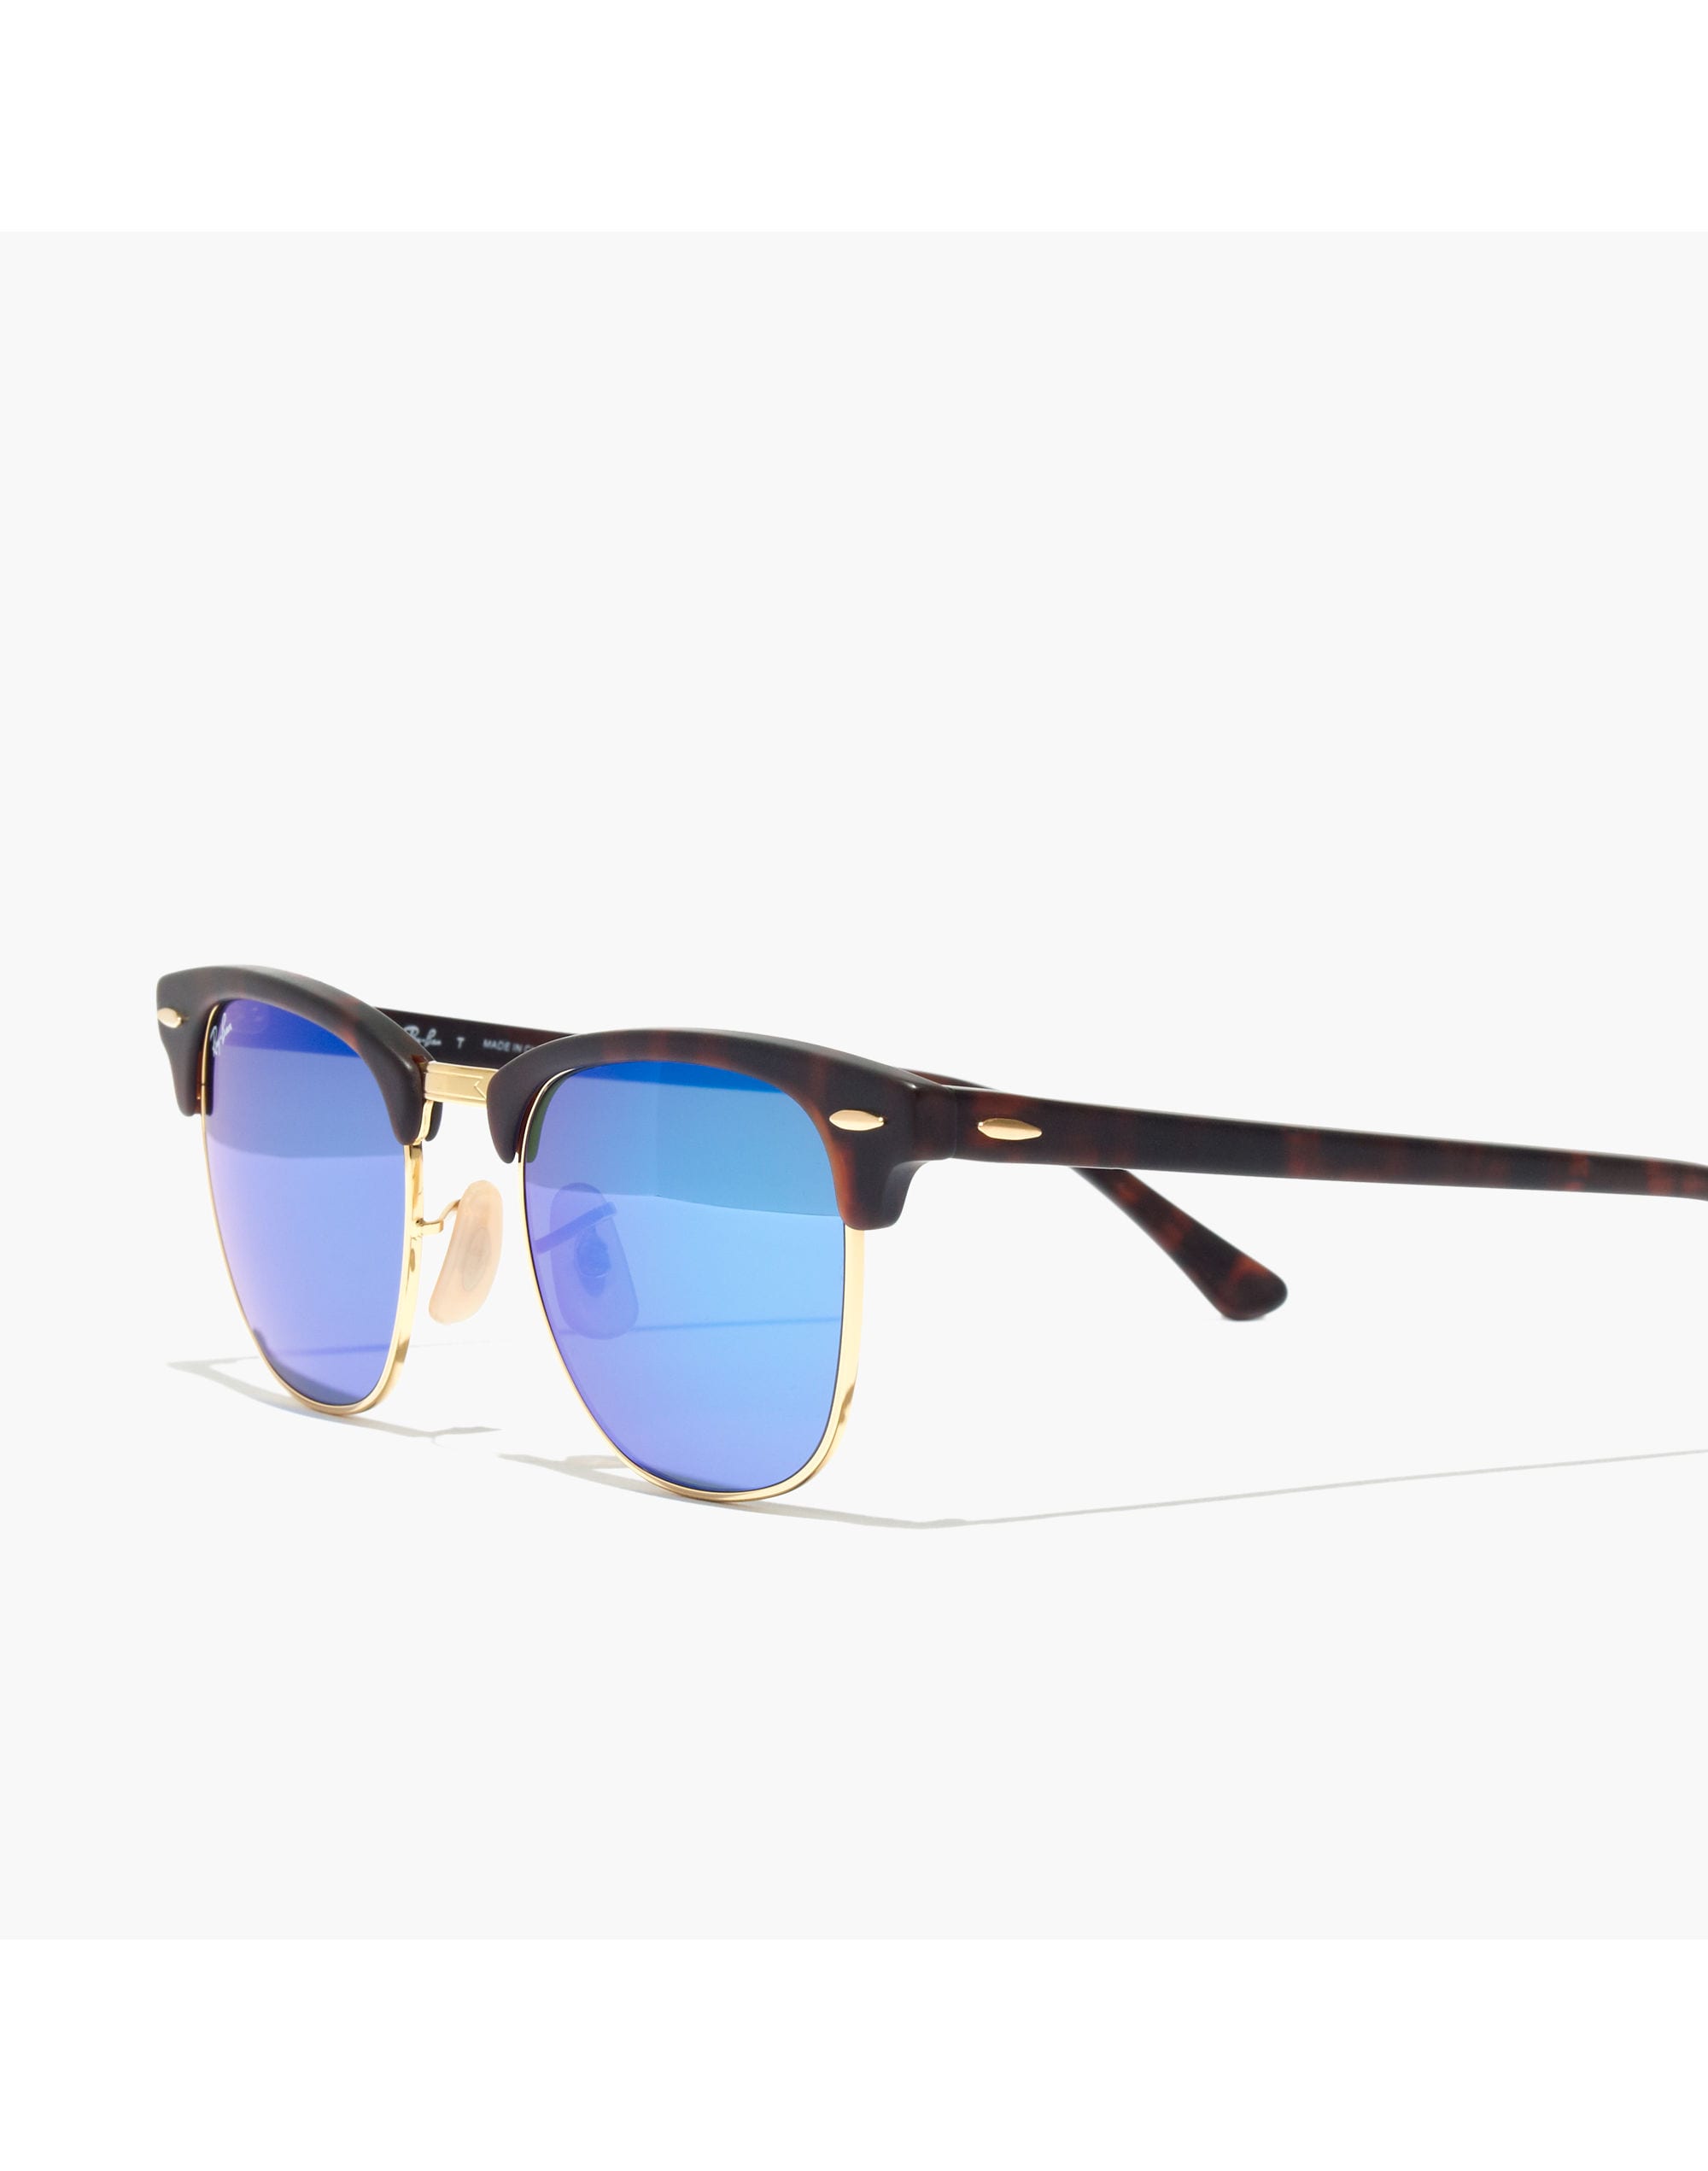 Ray-Ban® Clubmaster® Flash Sunglasses